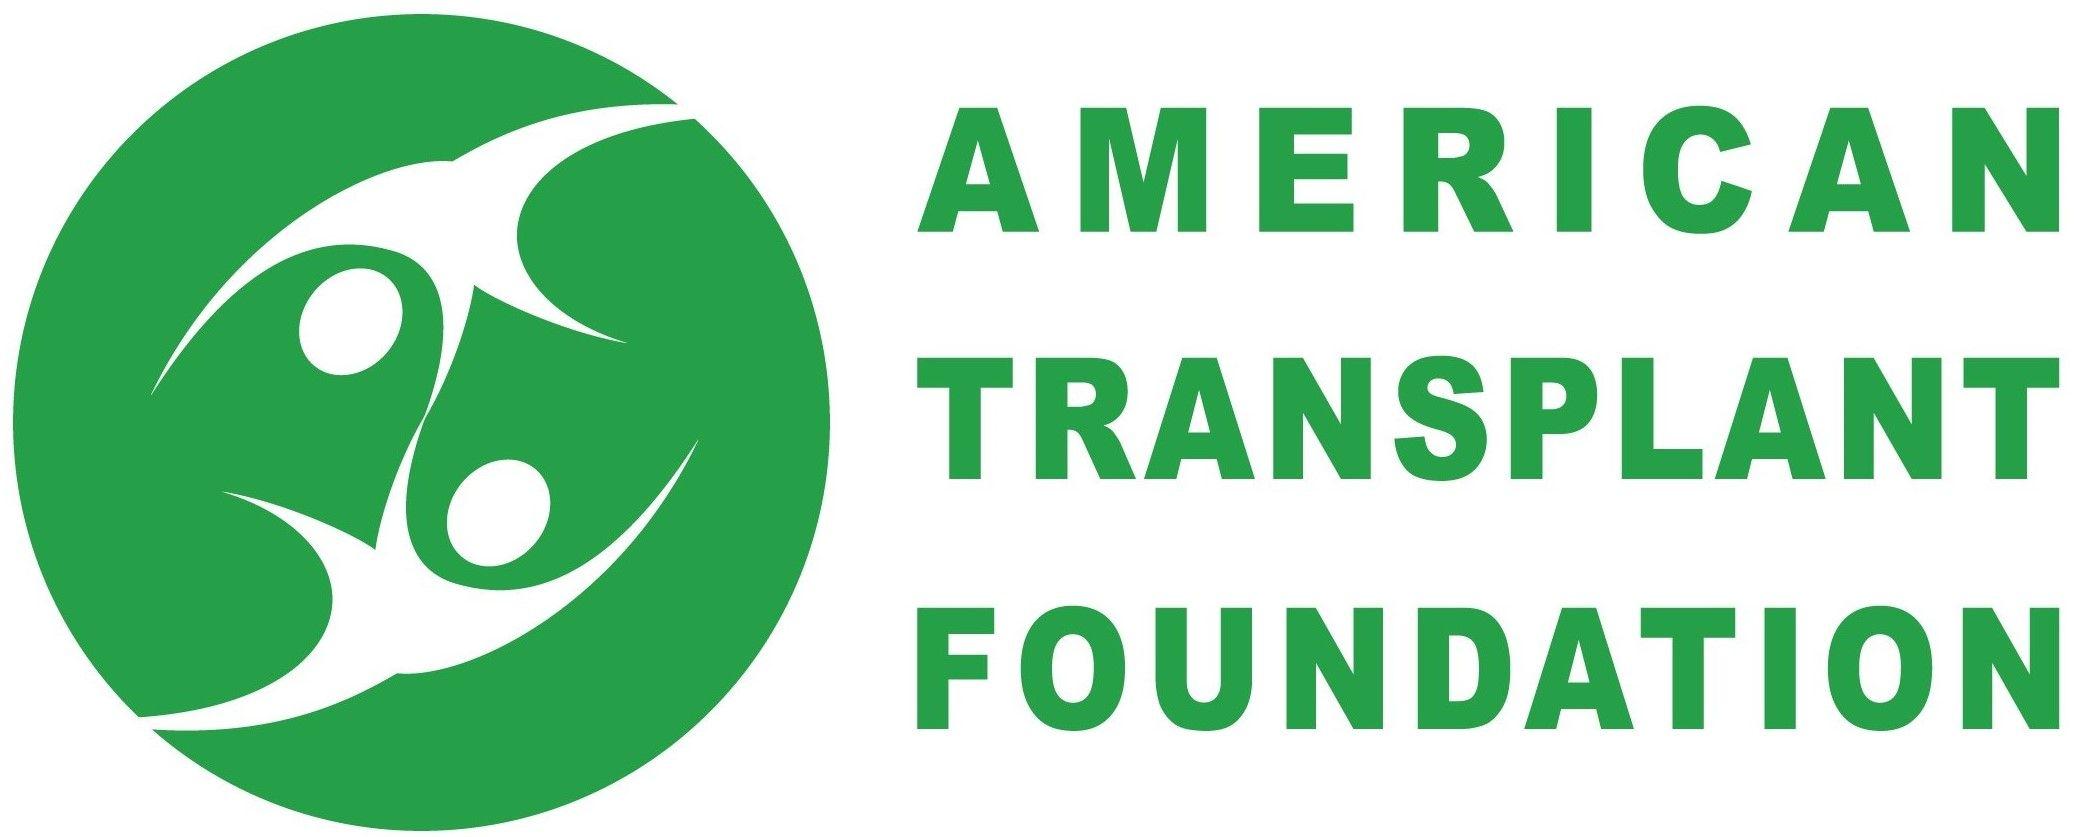 Transplant Logo - Even Superheroes Need Help Sometimes - American Transplant Foundation